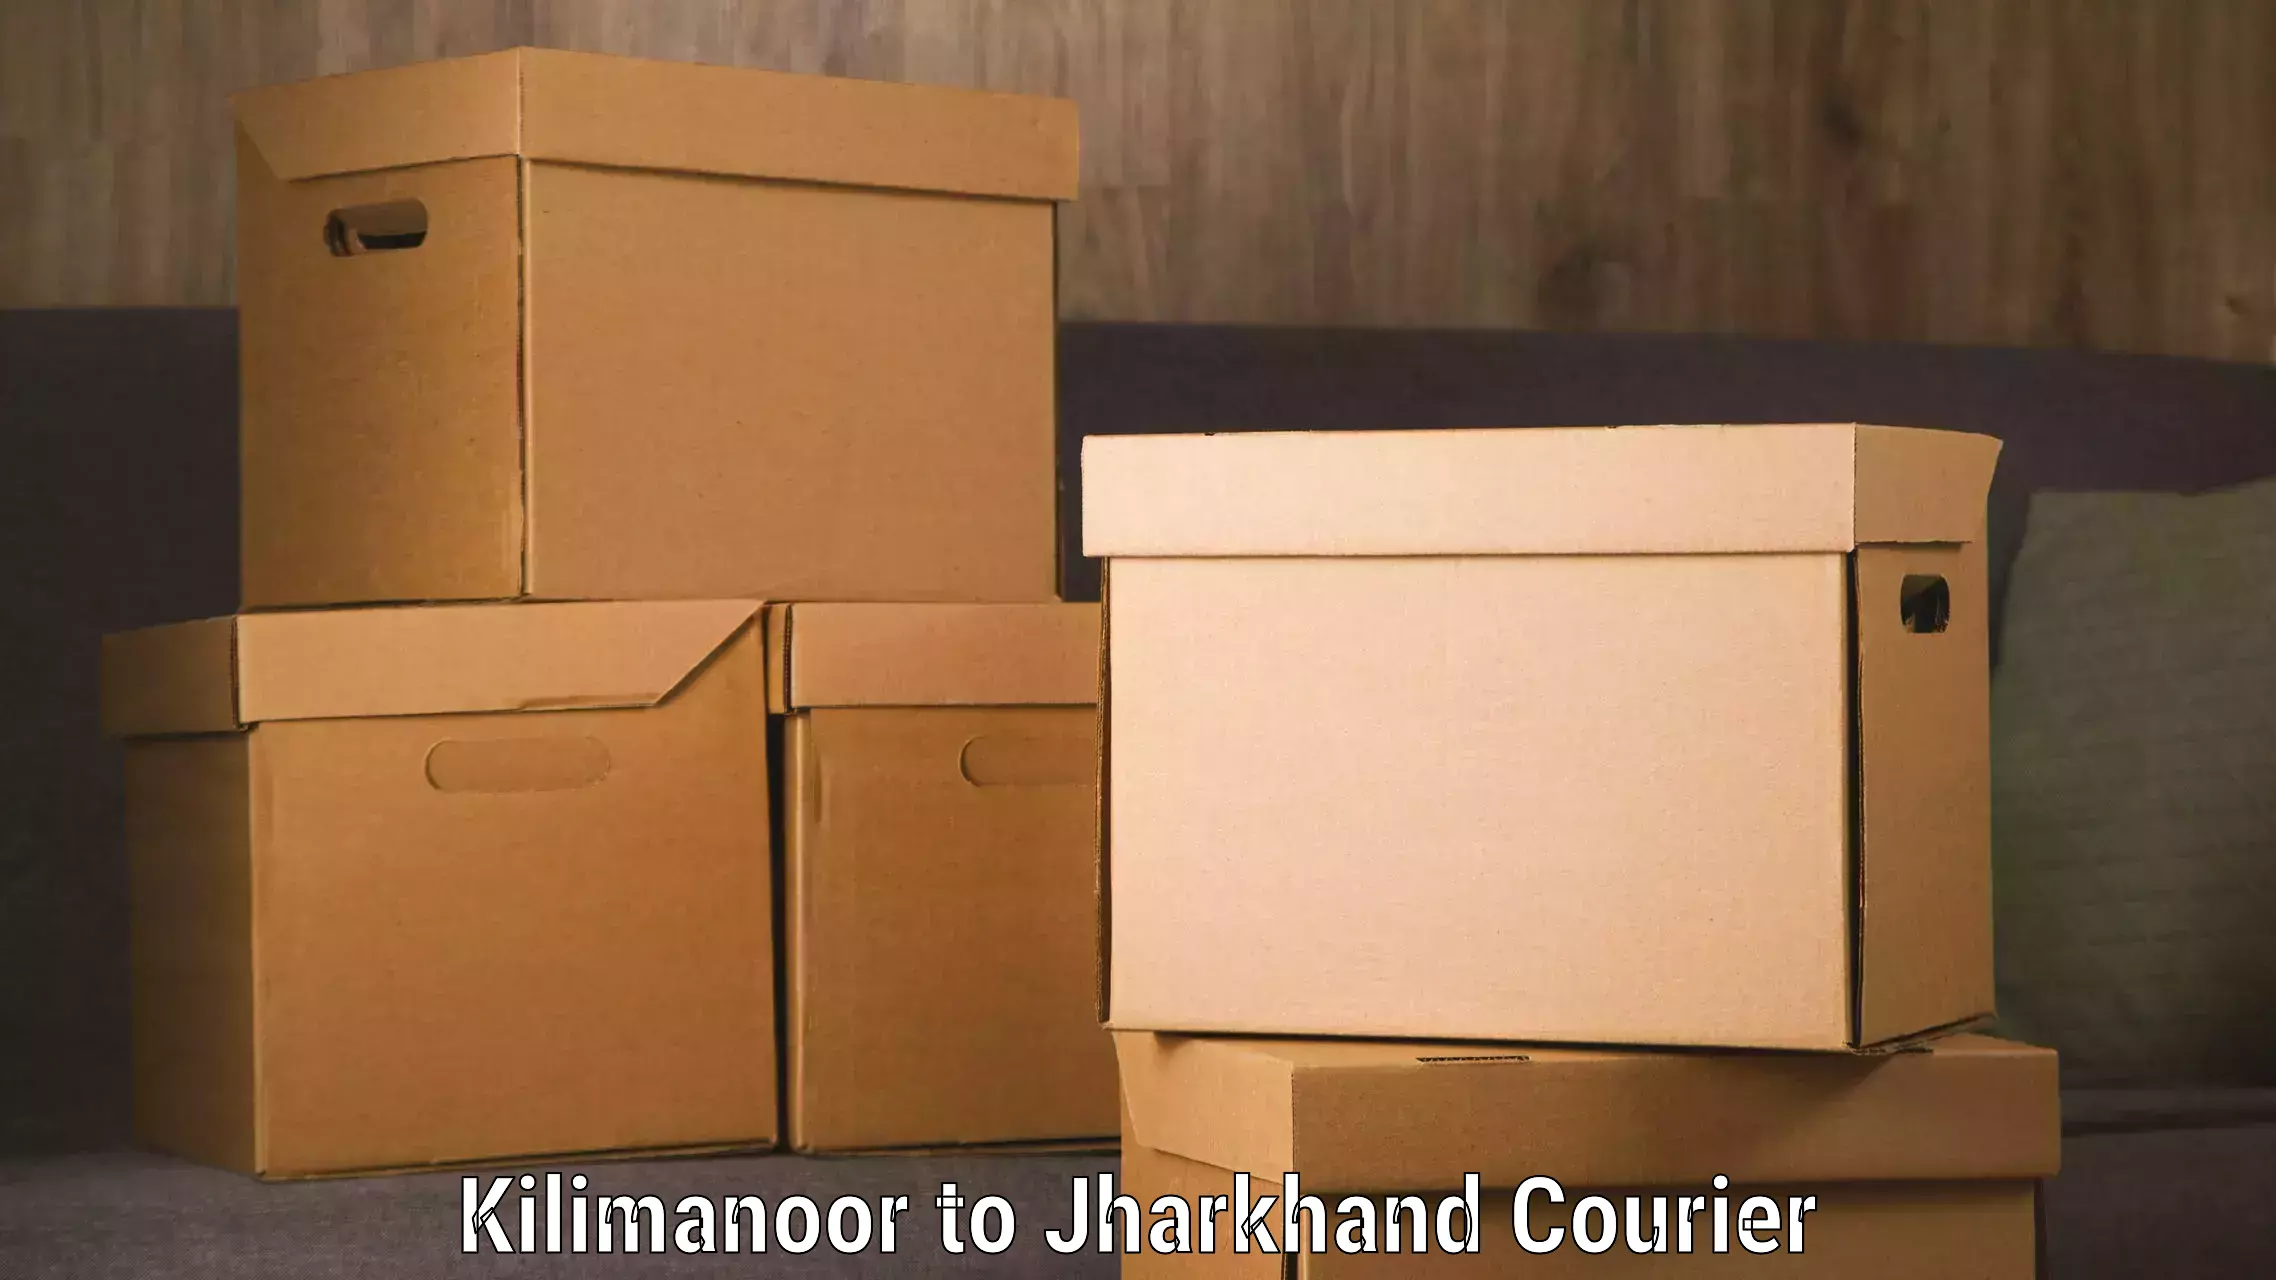 Cash on delivery service Kilimanoor to Kedla